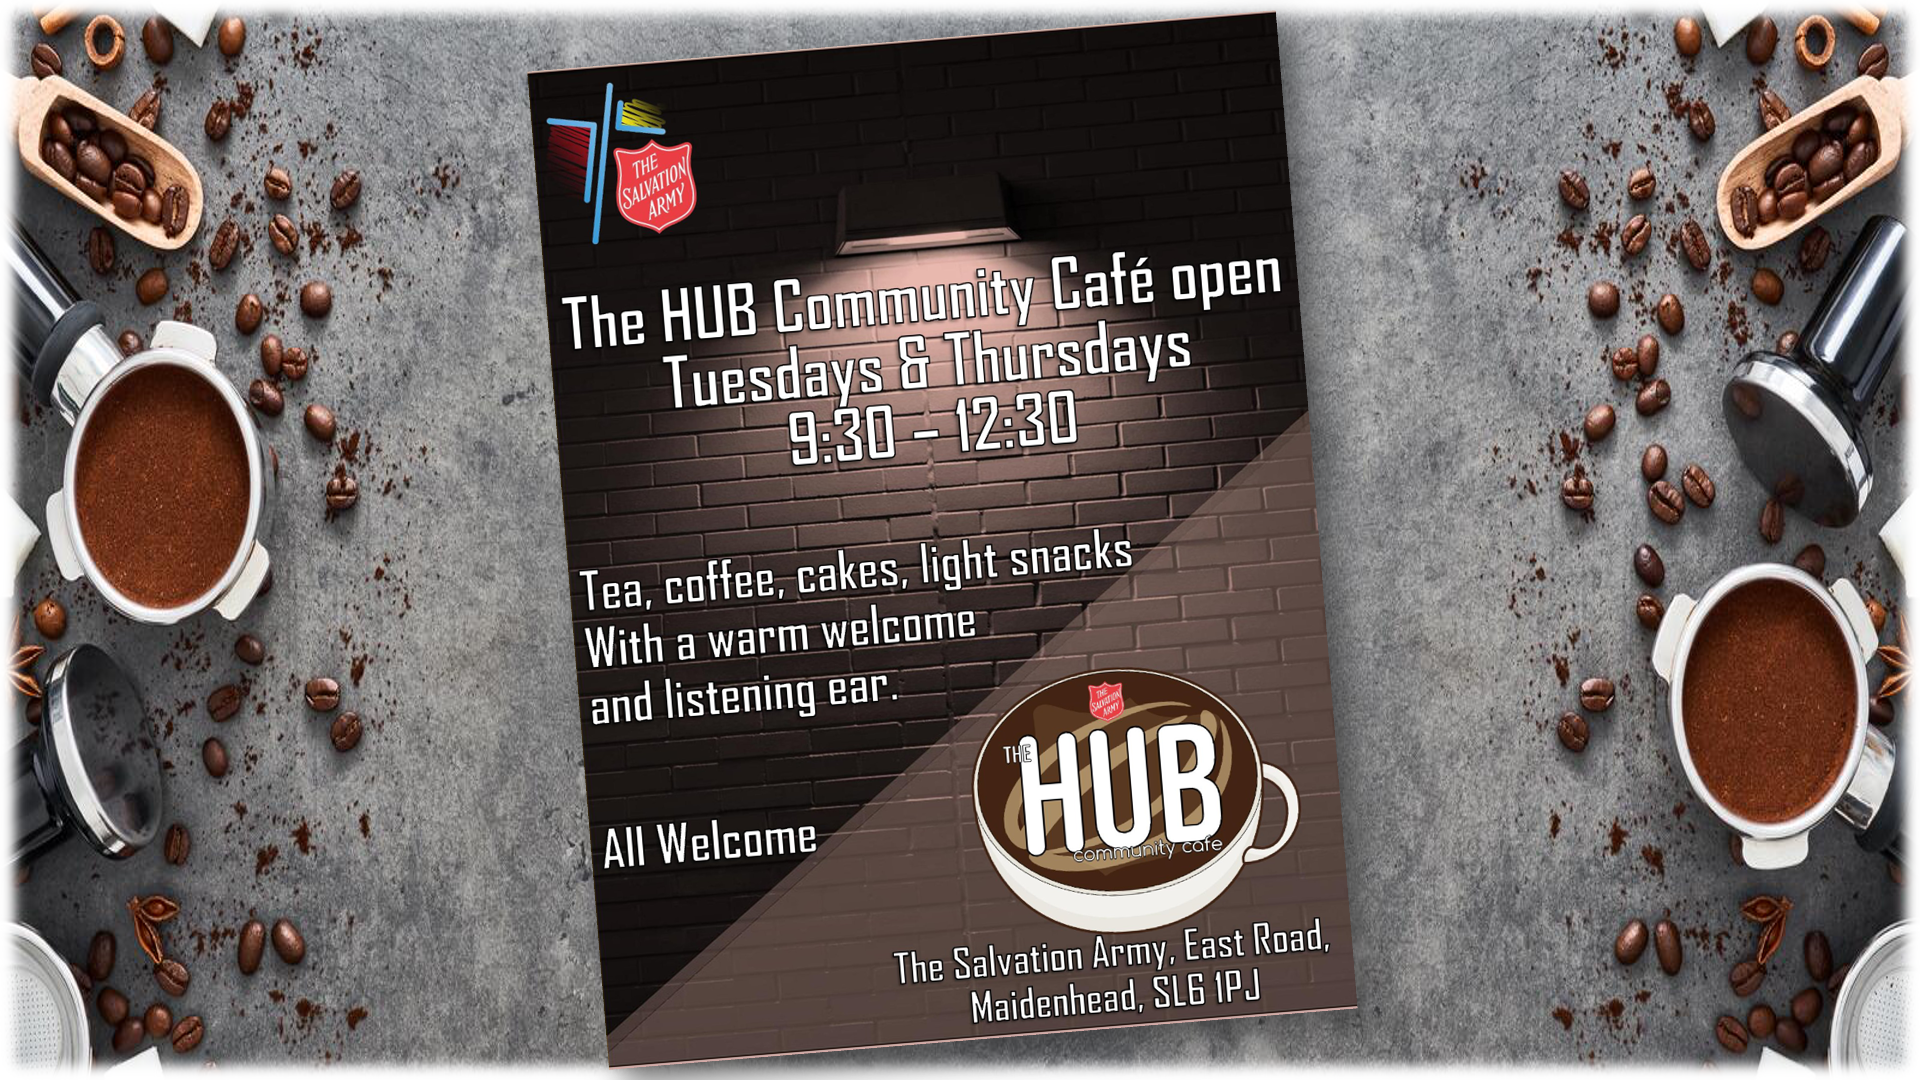 Maidenhead Salvation Army Hub Community Cafe Poster